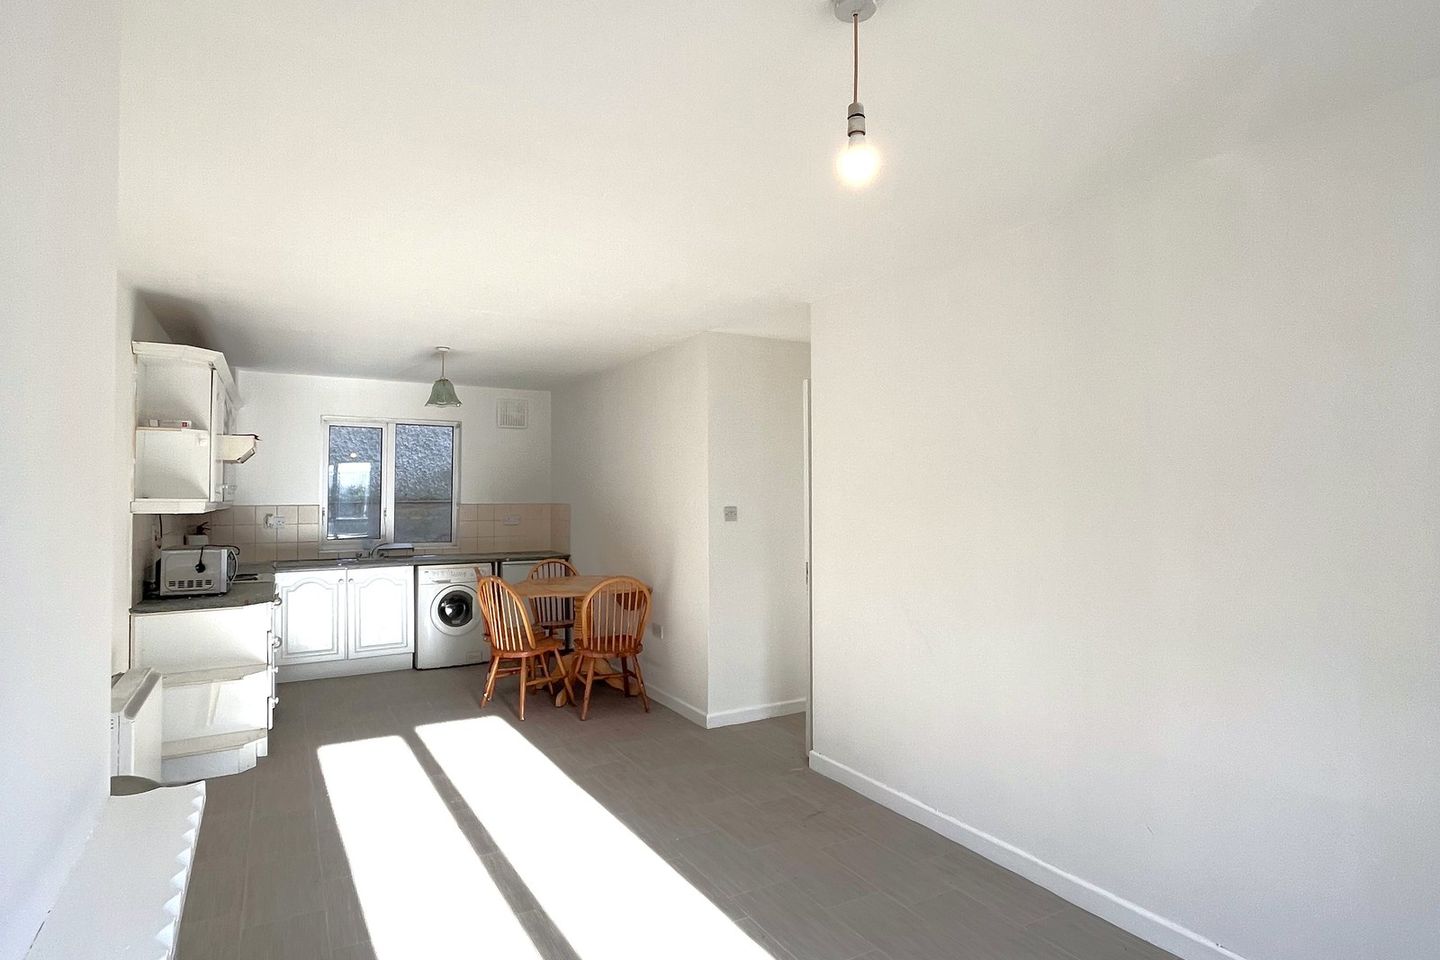 Apartment 1, Patrick Court, Newbridge, Co. Kildare, W12N768